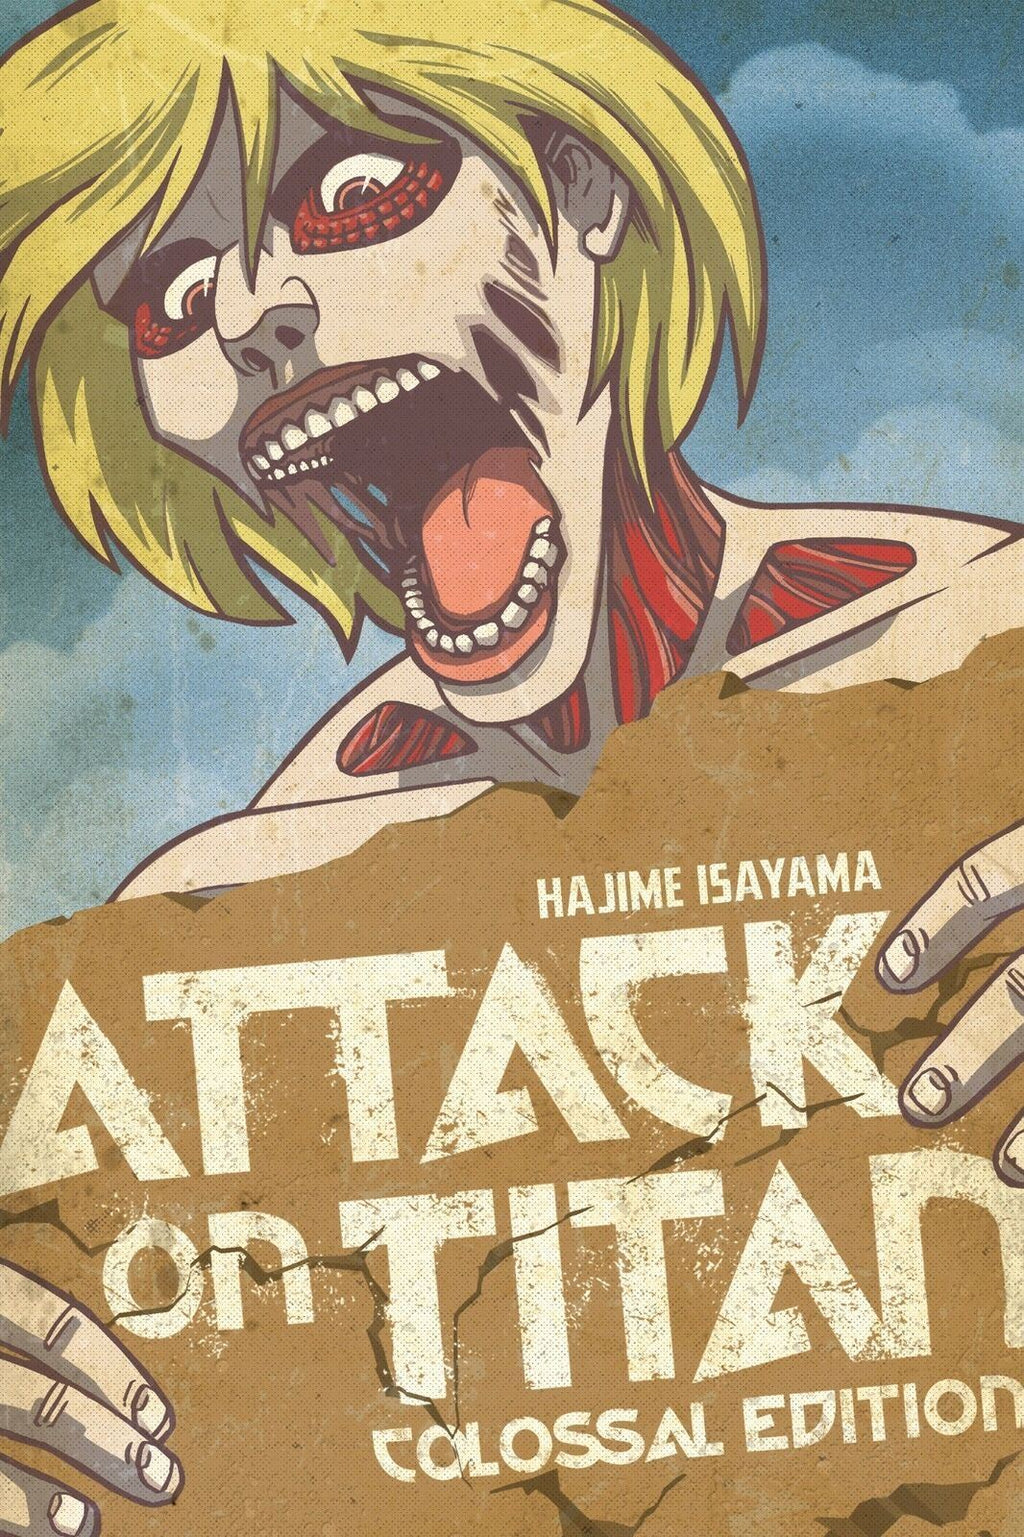 Attack on Titan, Volume 5